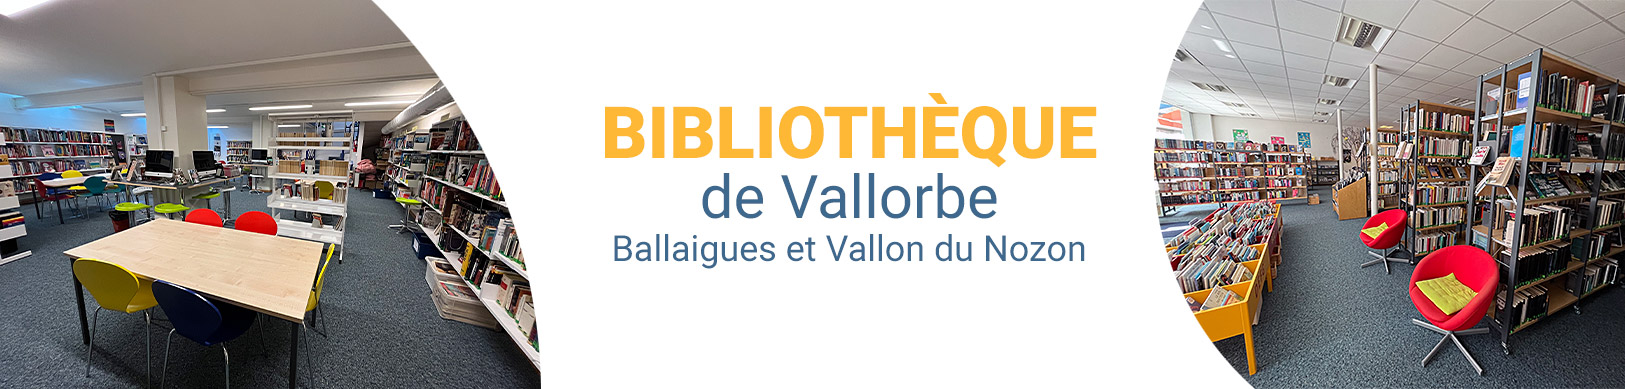 Bibliothèque de Vallorbe